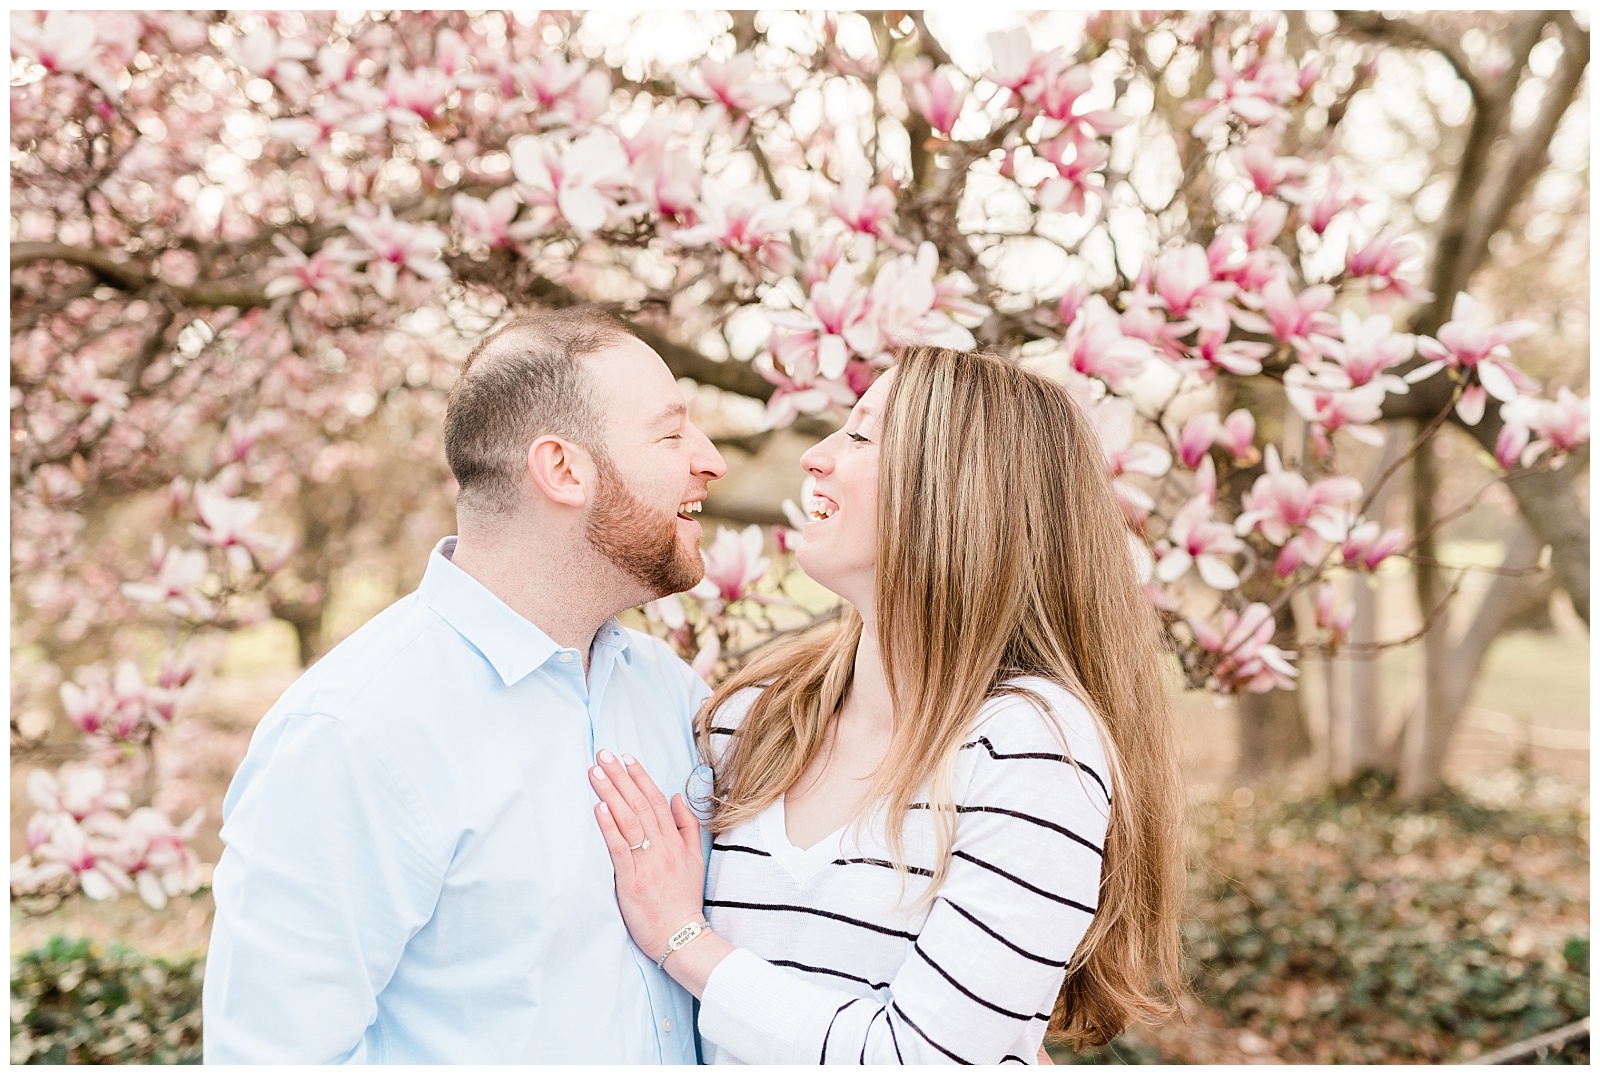 Central Park, NYC engagement session, springtime, wedding photographer, New York, flowers